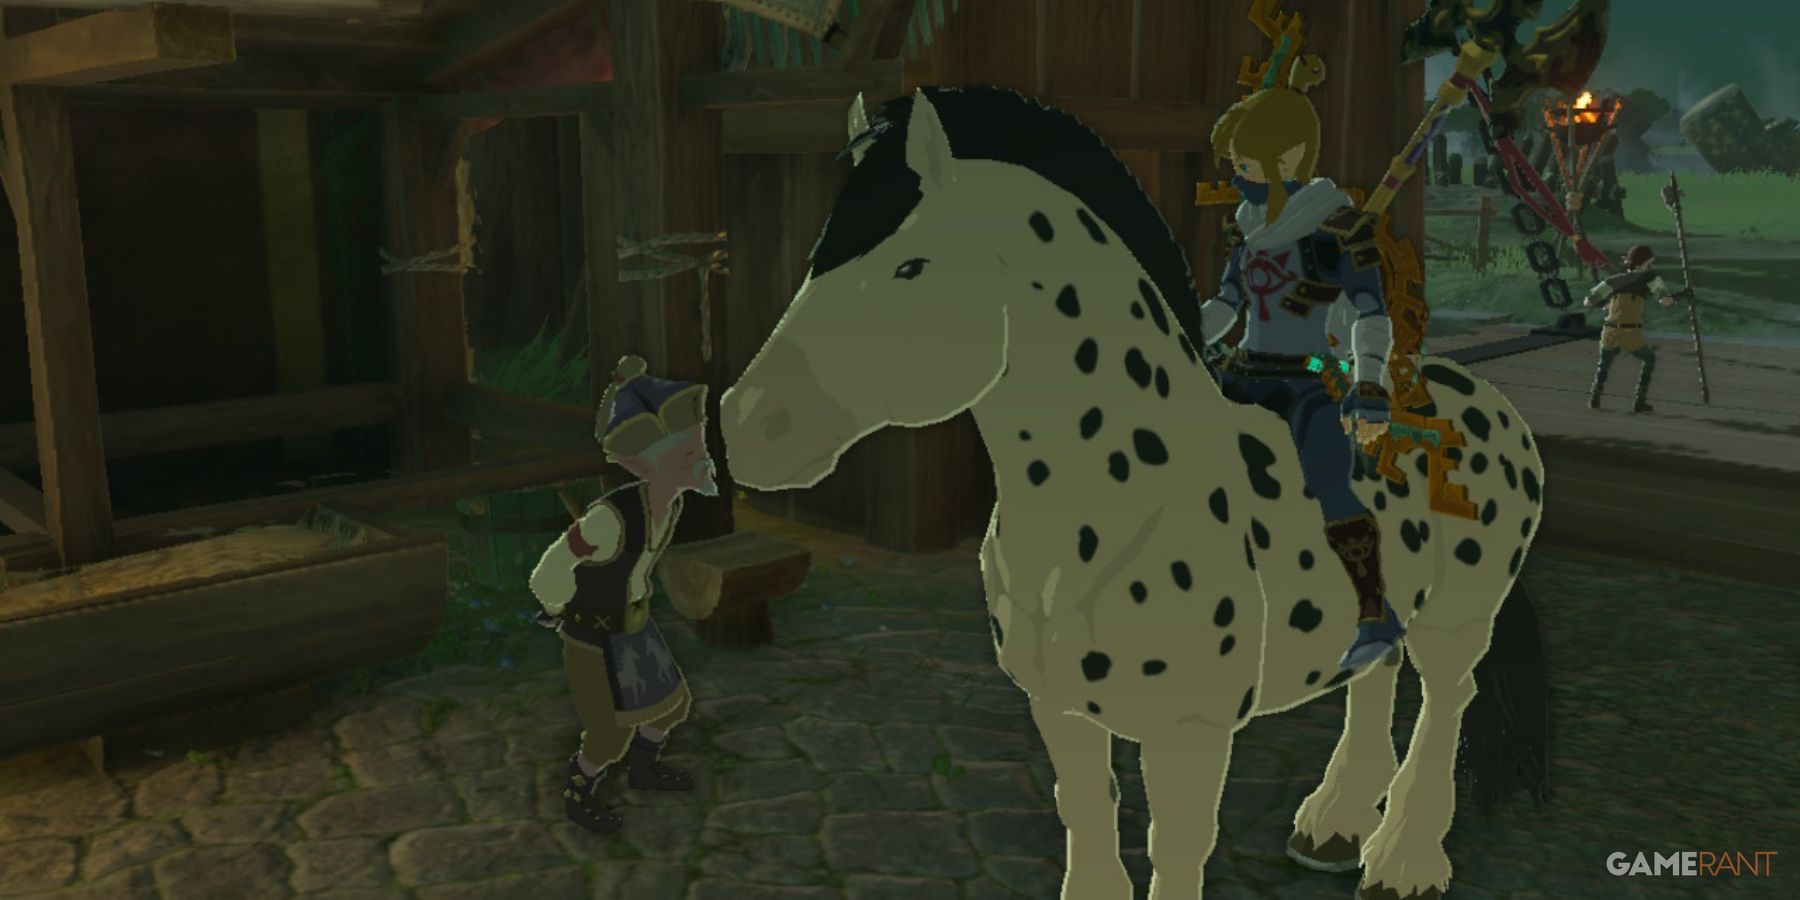 Find horse tears from the kingdom legend of Zelda